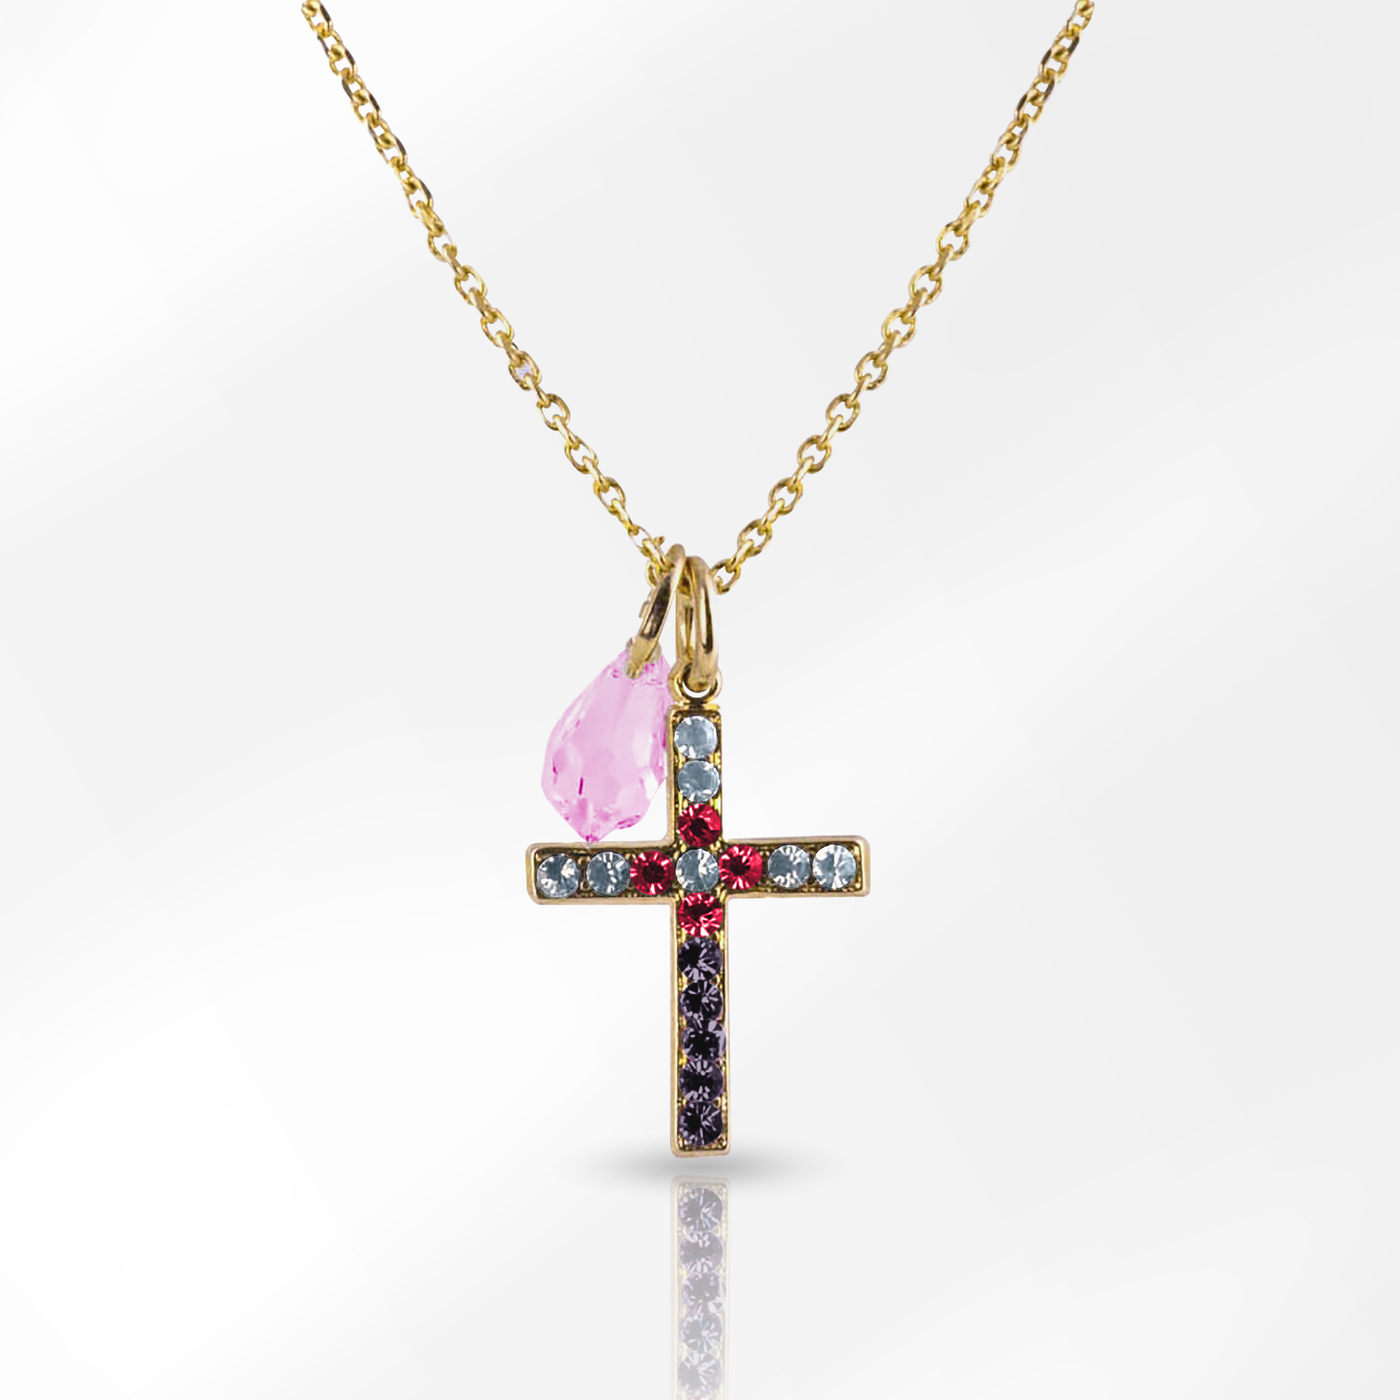 Petite Cross "Enchanted" Pendant